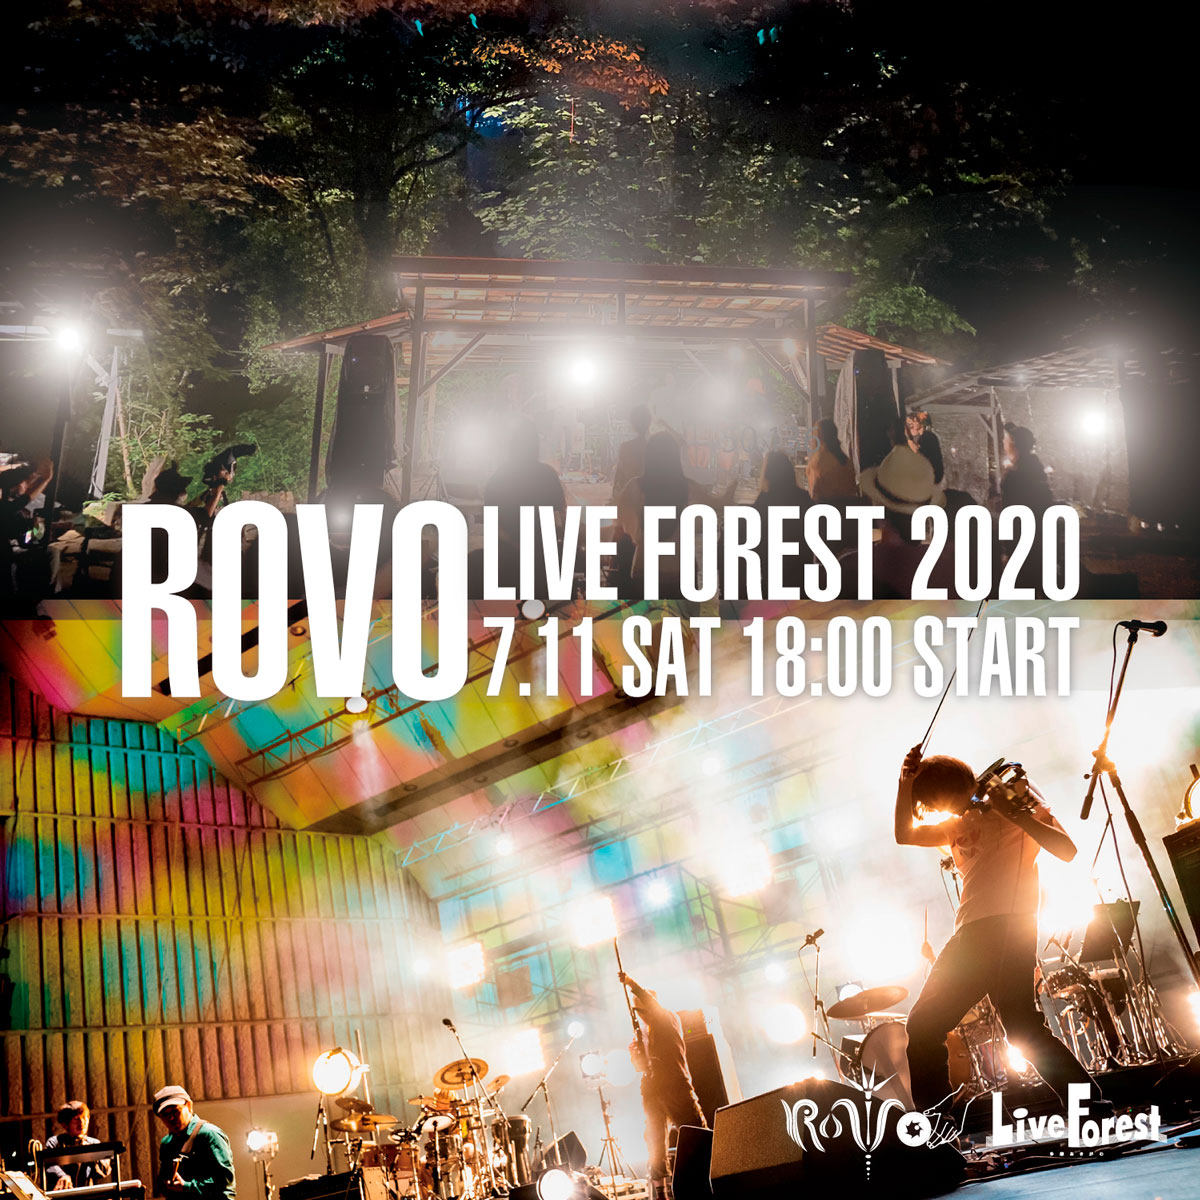 ROVO LIVE FOREST 2020
事前告知バナーのデザイン